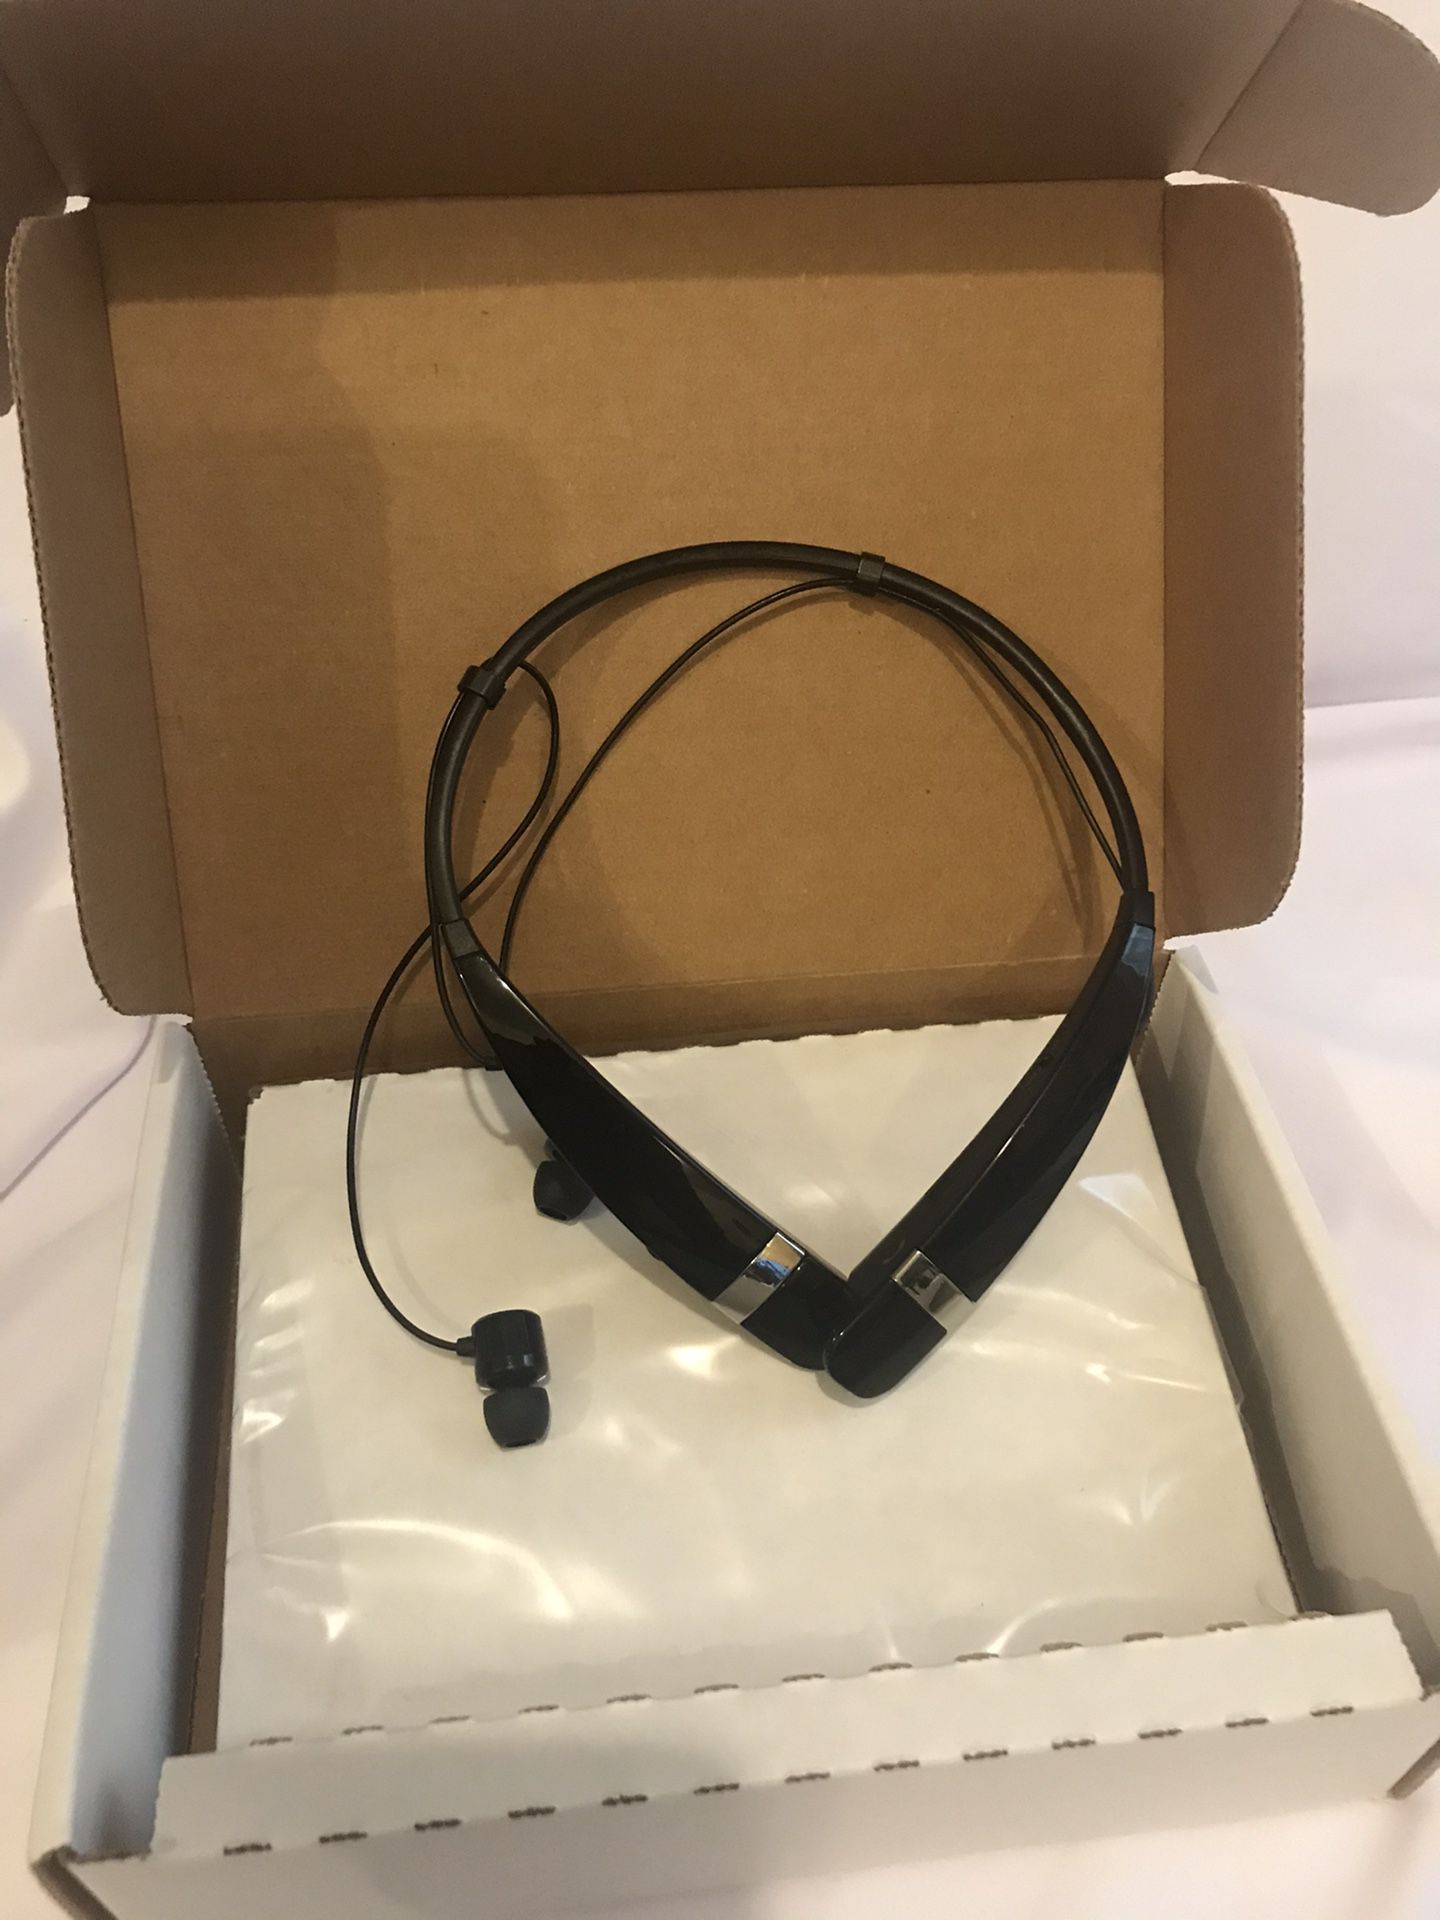 LG 760 Bluetooth wireless headphones